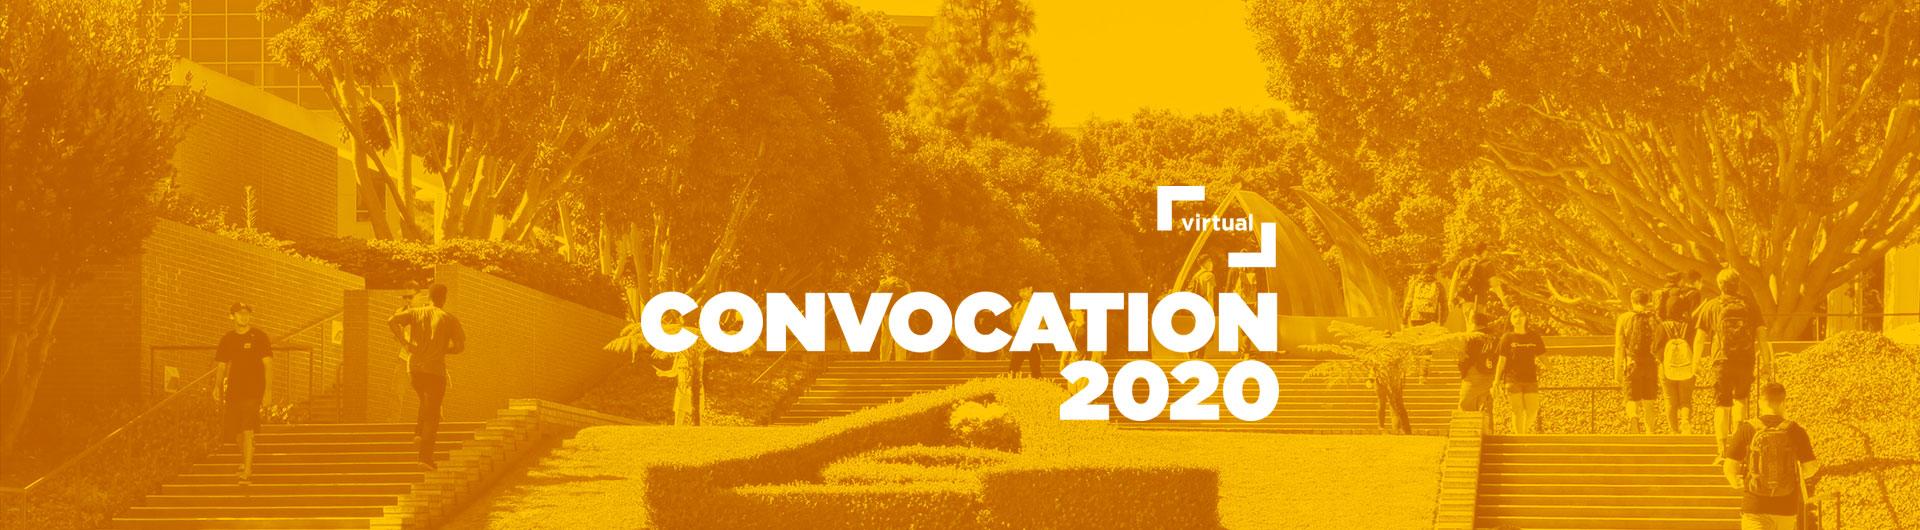 Convocation 2020